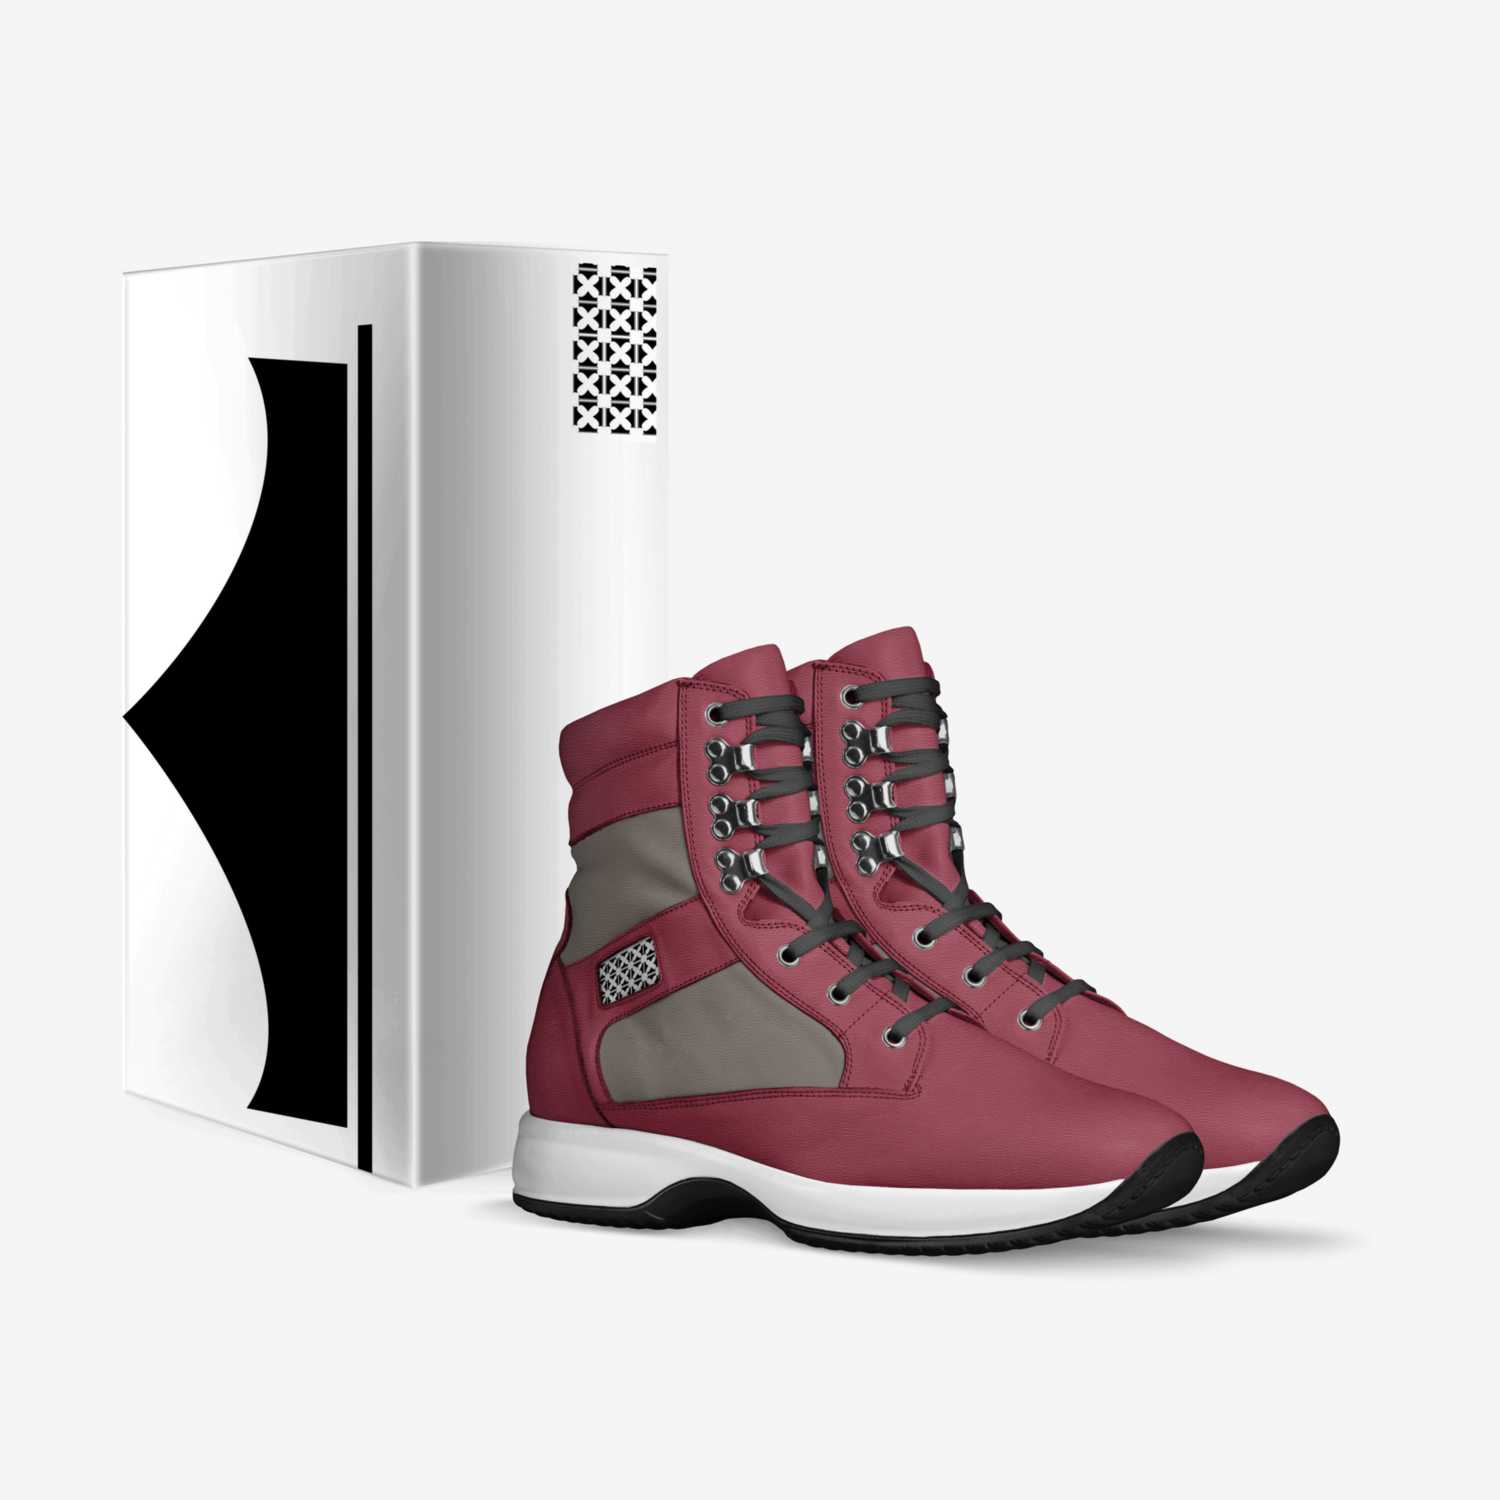 CC&J custom made in Italy shoes by Rajahn Hollis | Box view